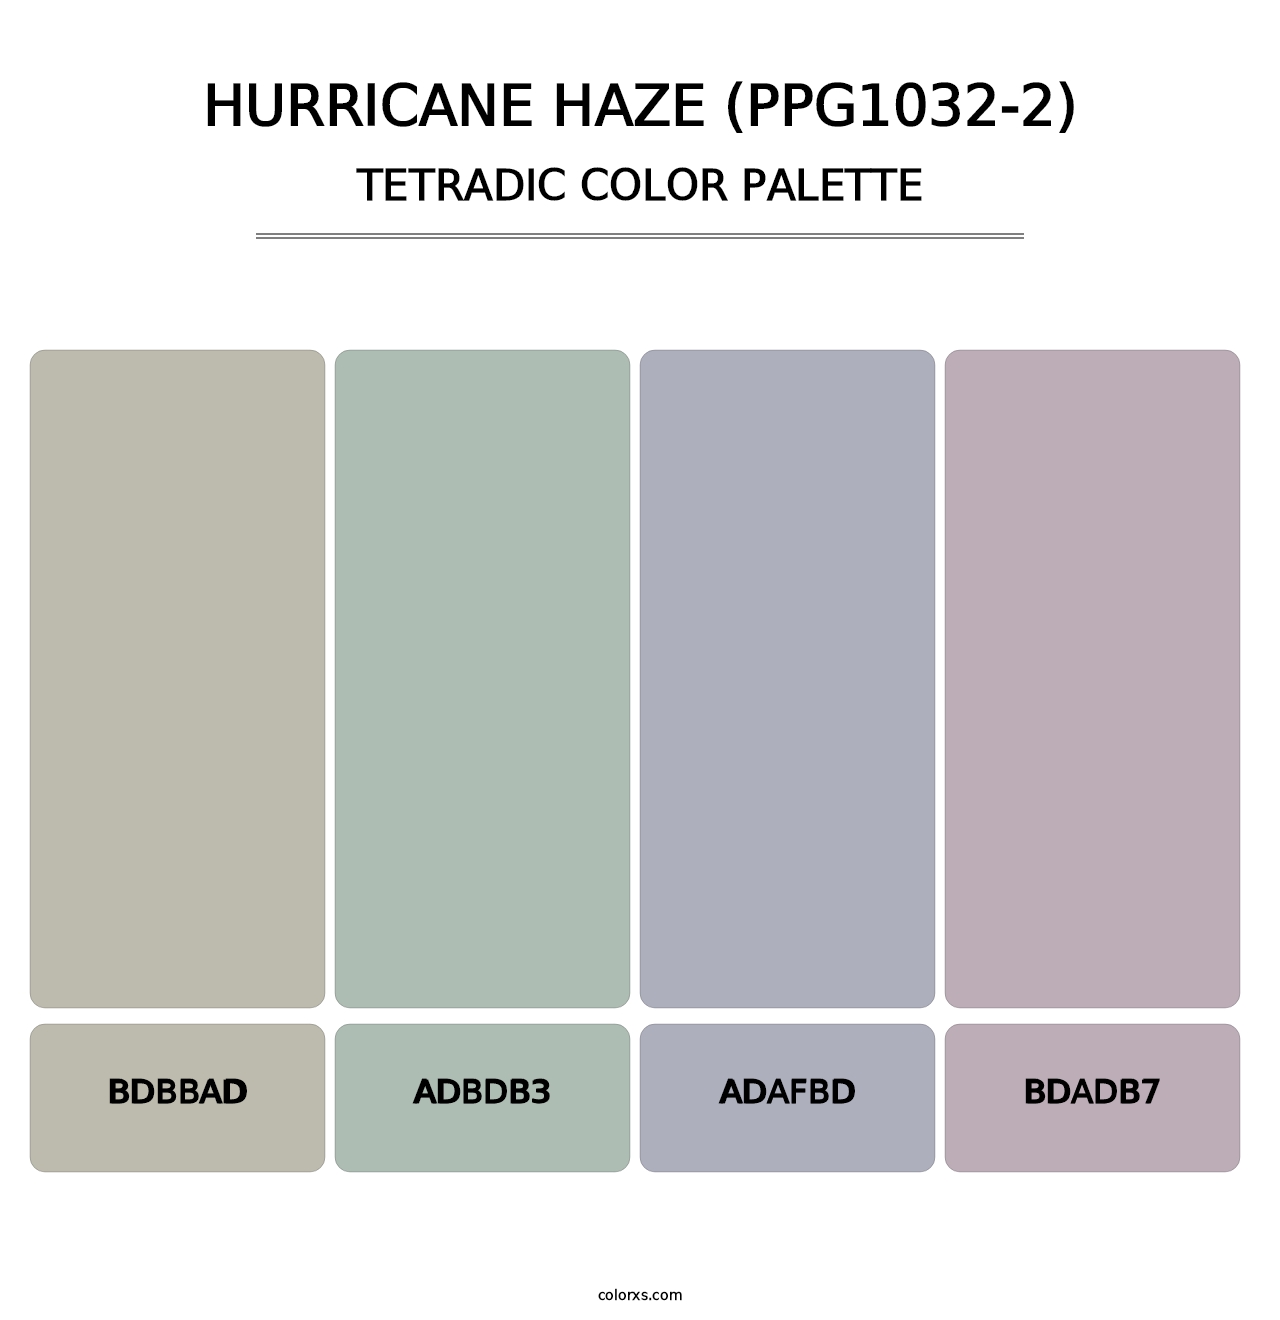 Hurricane Haze (PPG1032-2) - Tetradic Color Palette